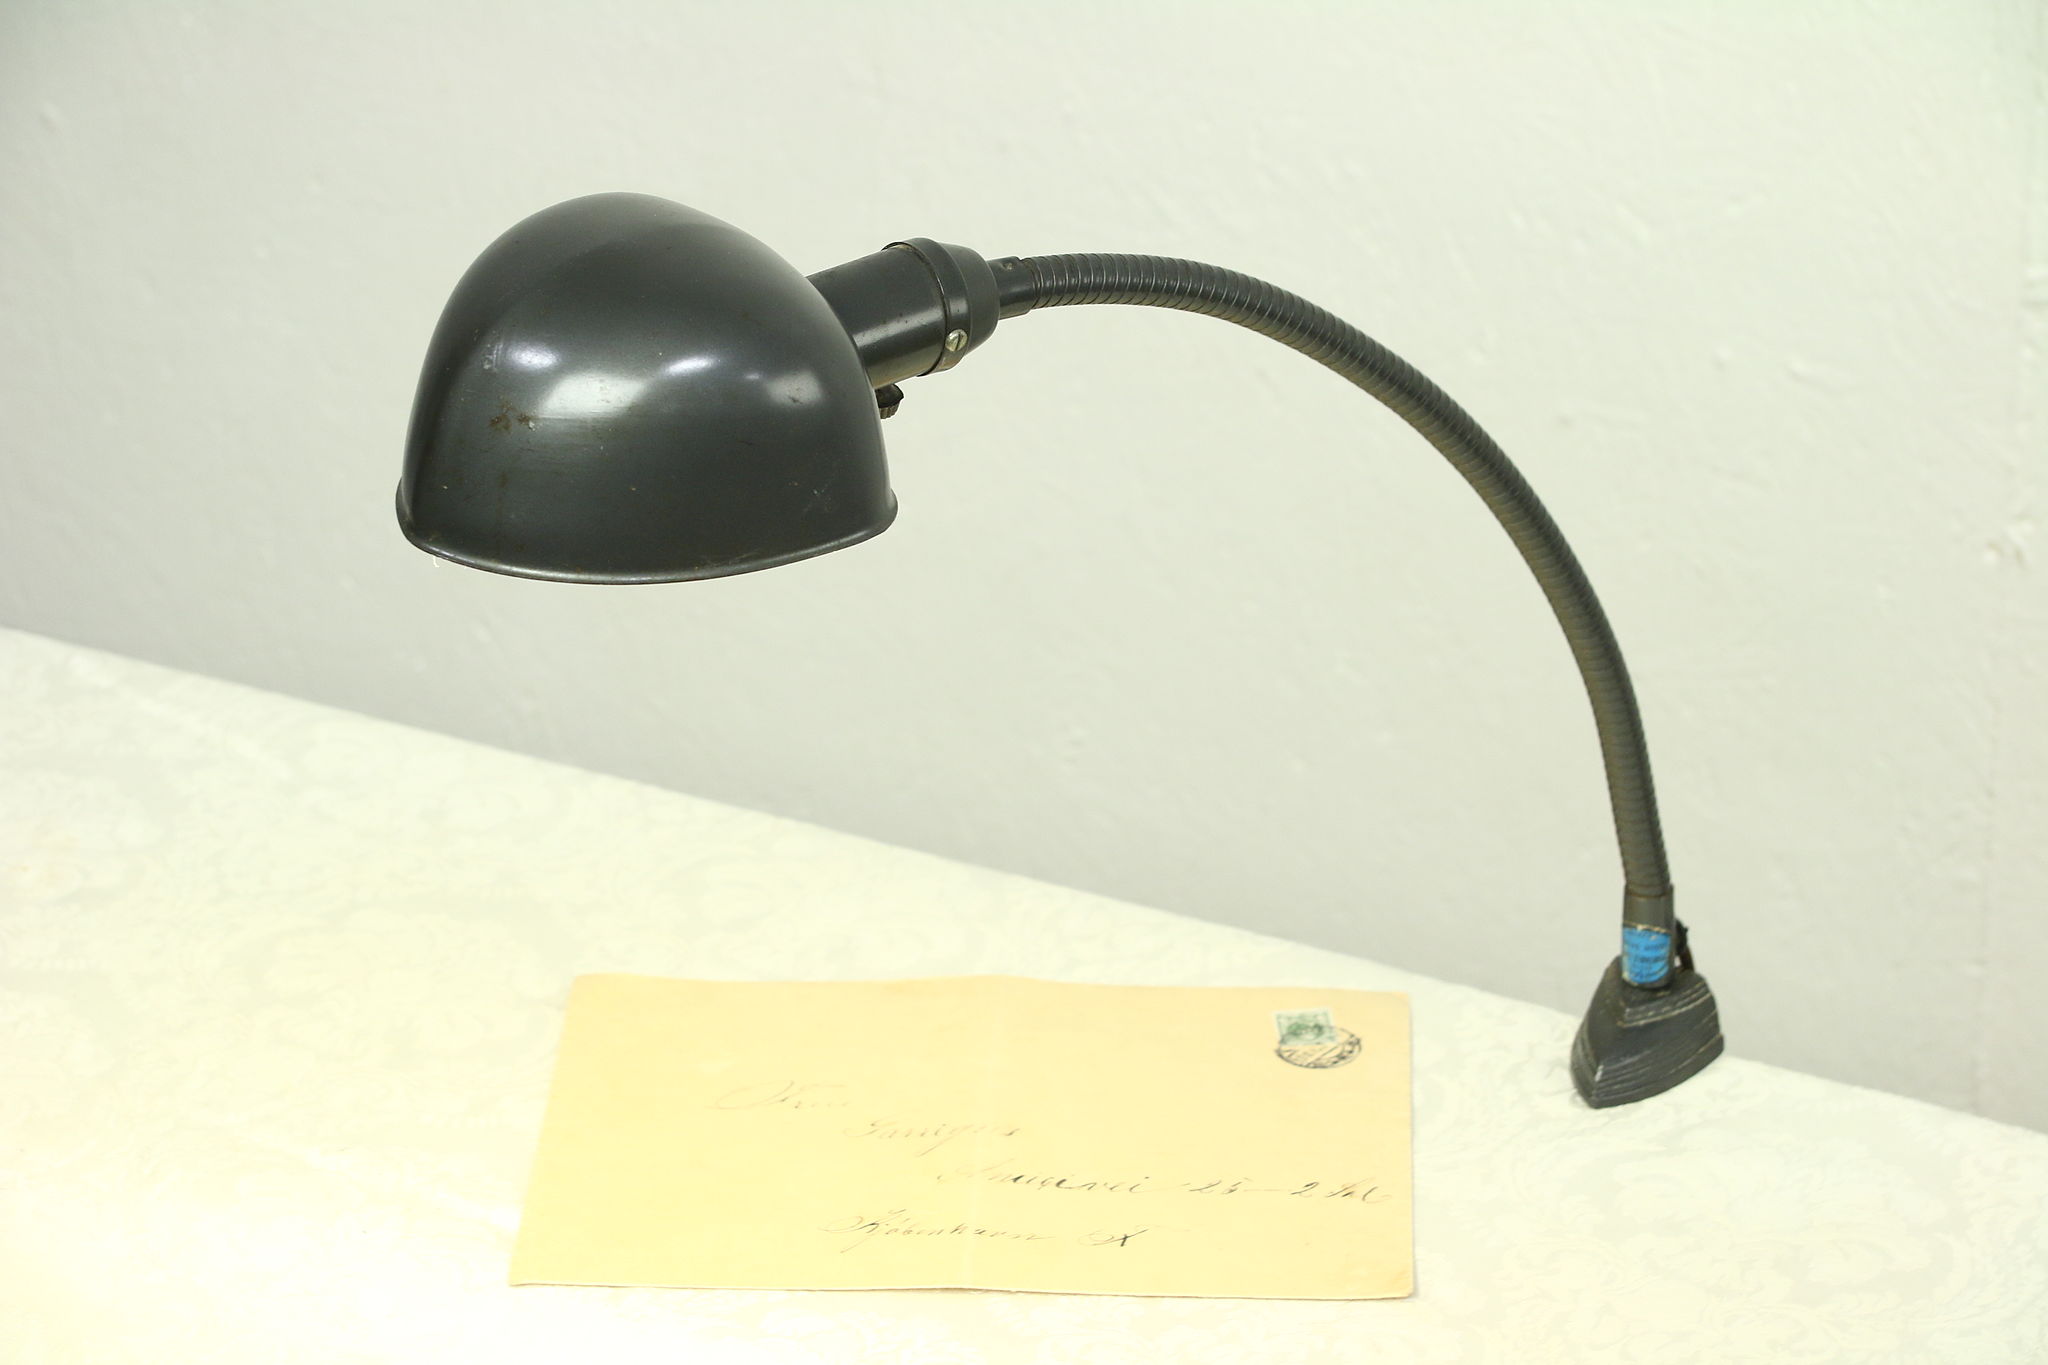 Workbench Lamp